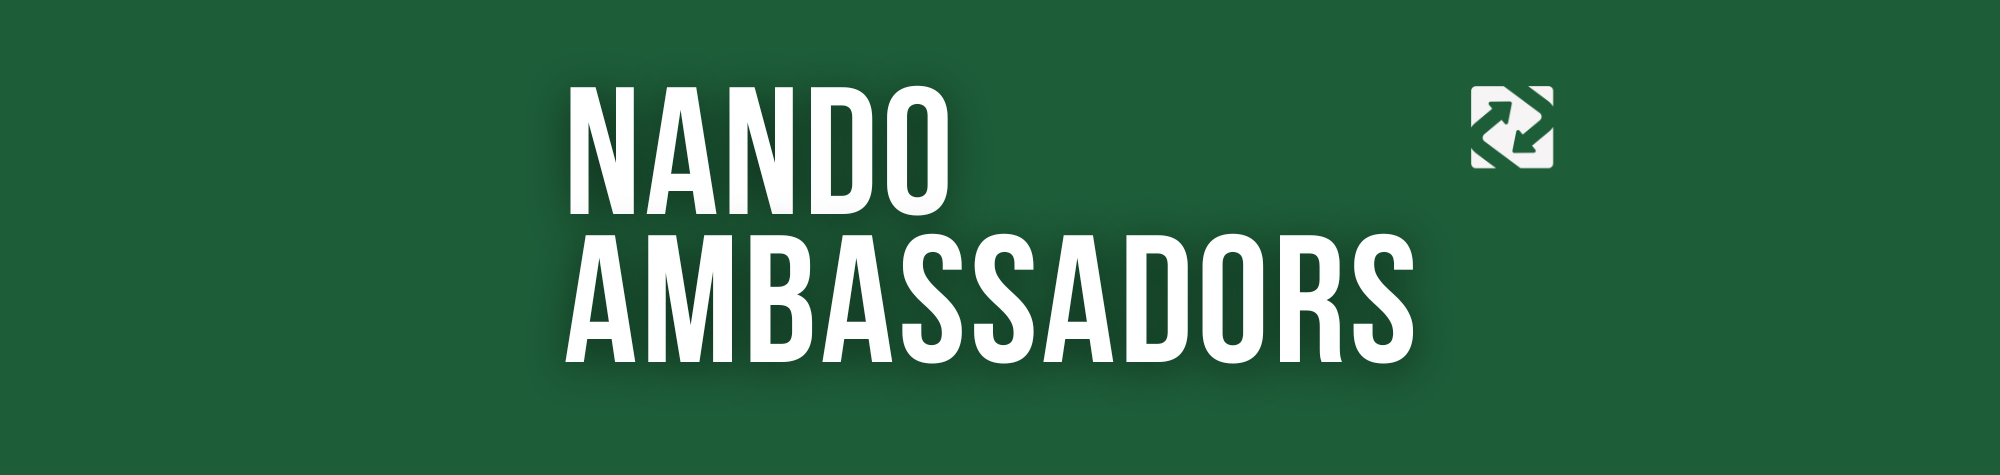 Welcome NANDO Ambassadors!